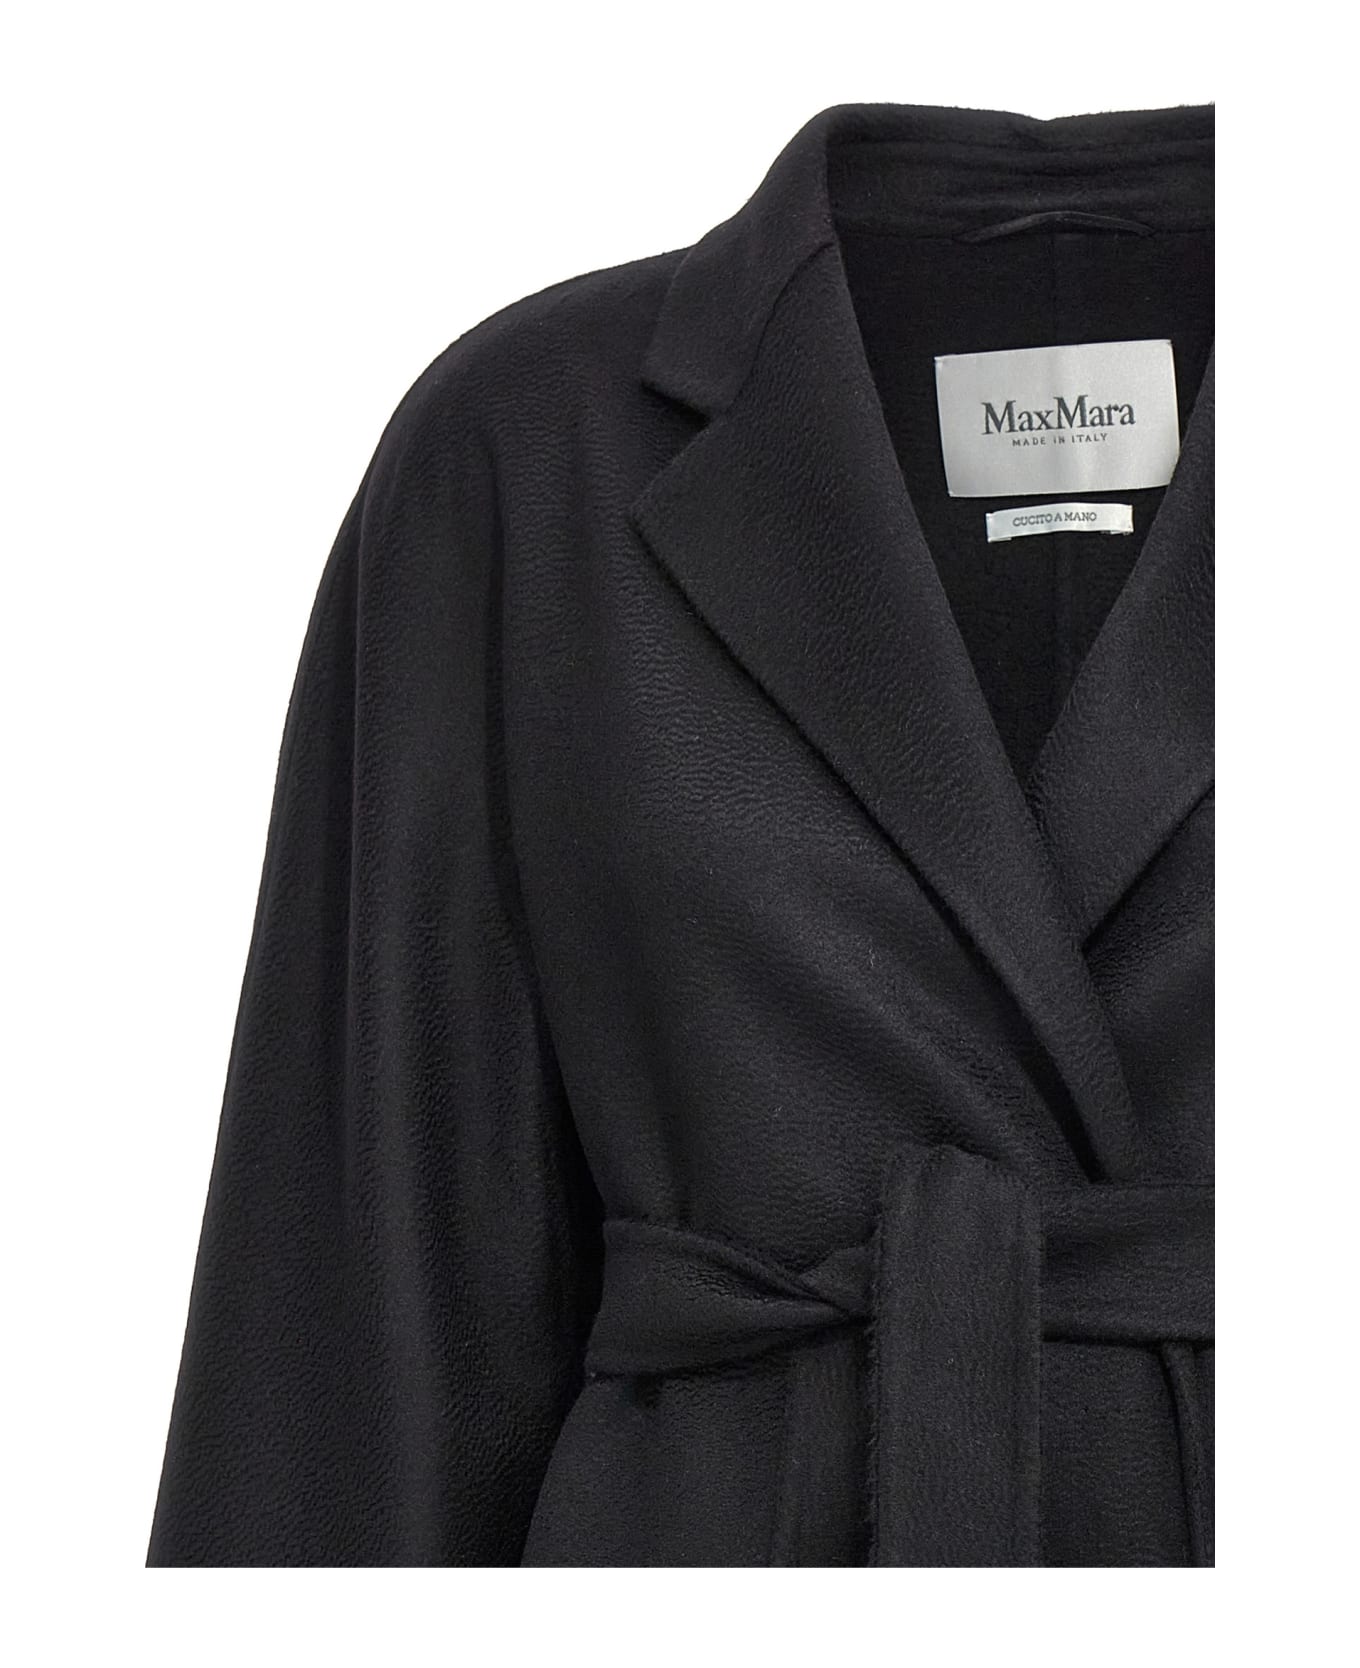 Max Mara 'harold' Jacket - Black   コート